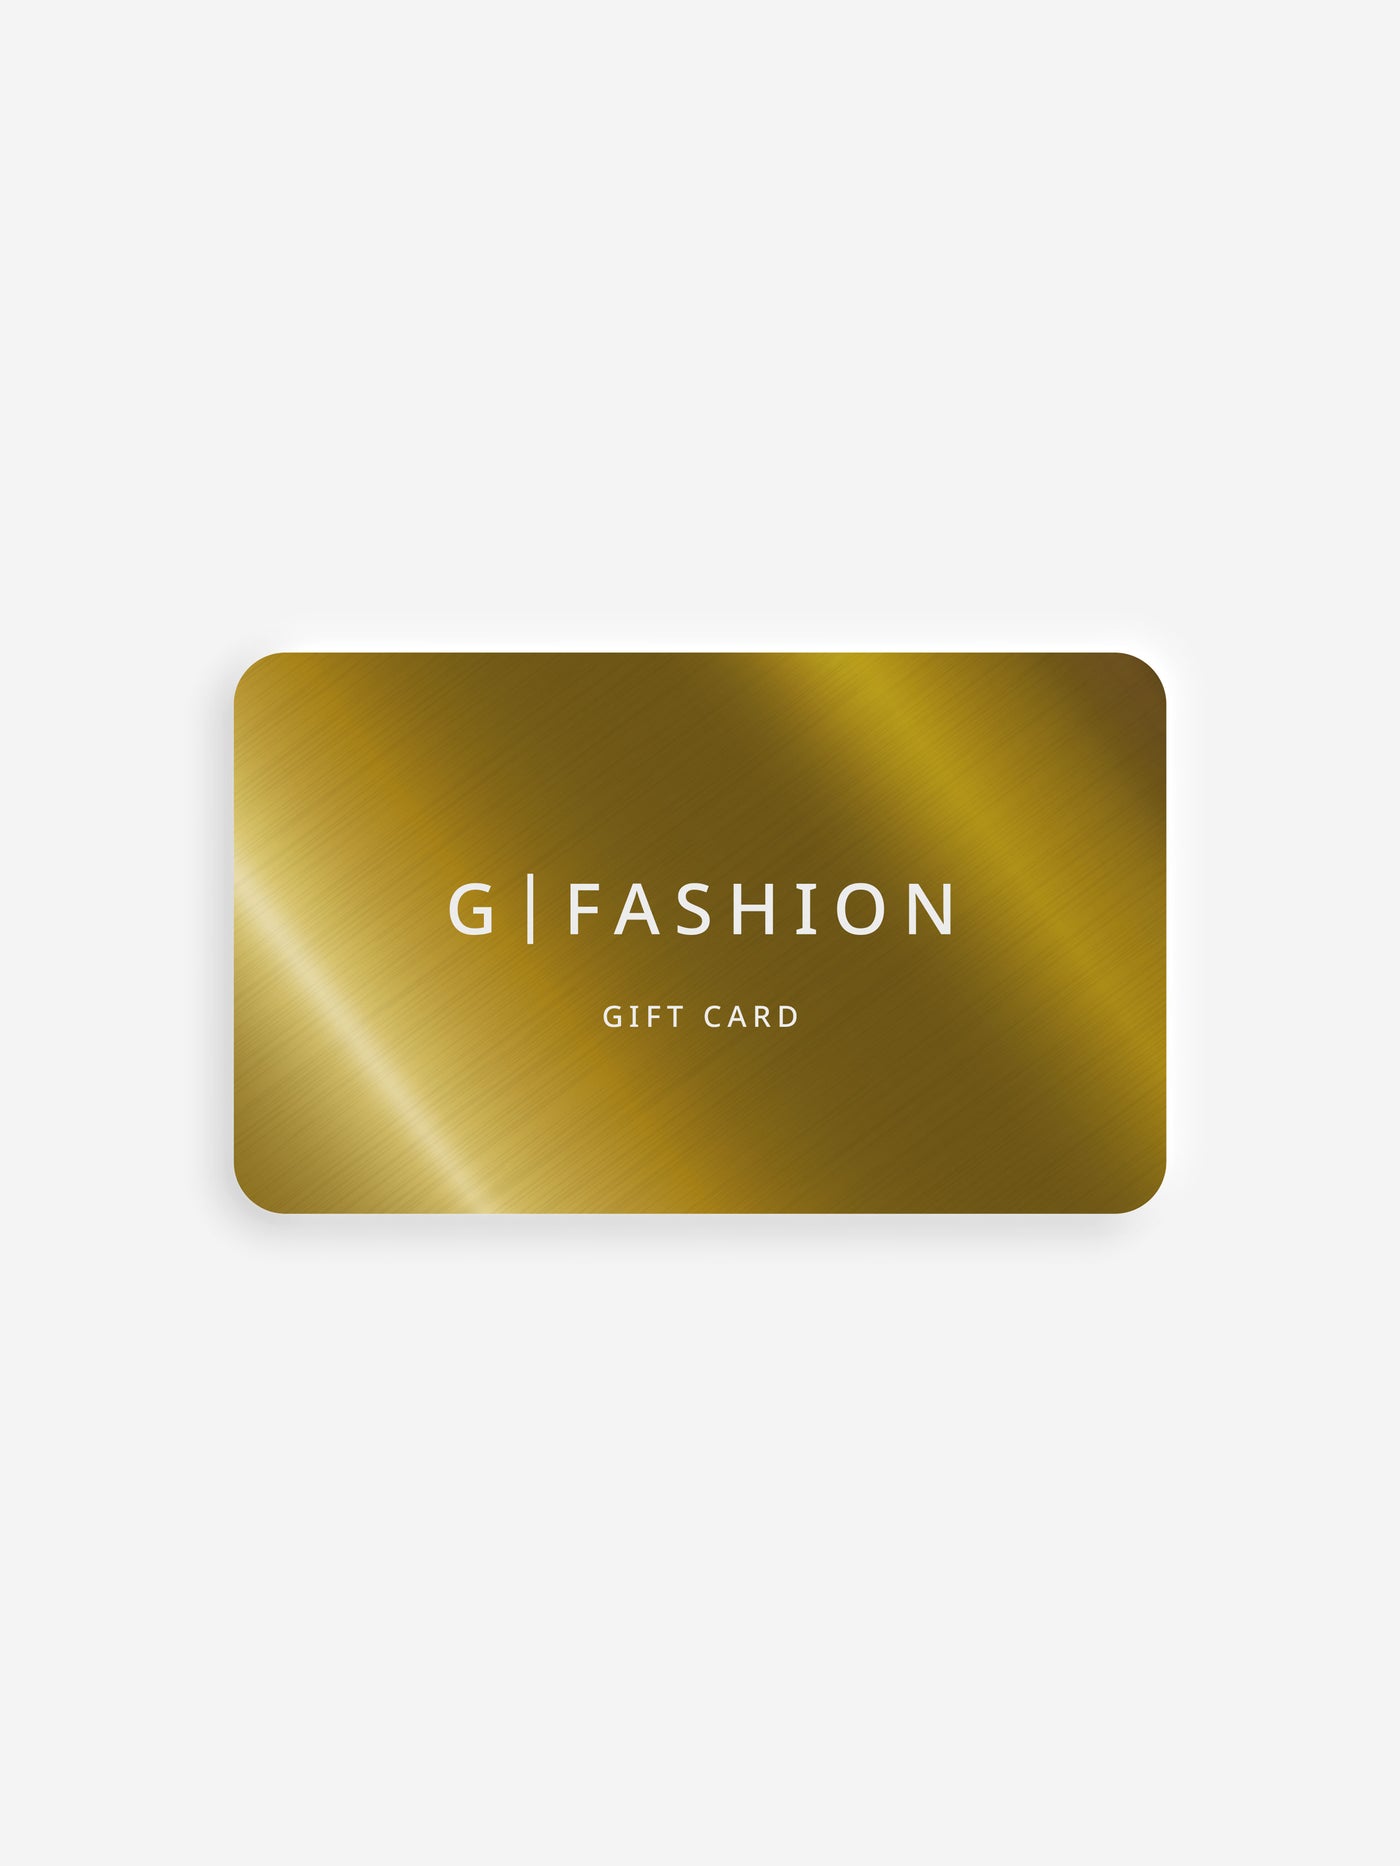 €5000 Gold Digital Gift Card